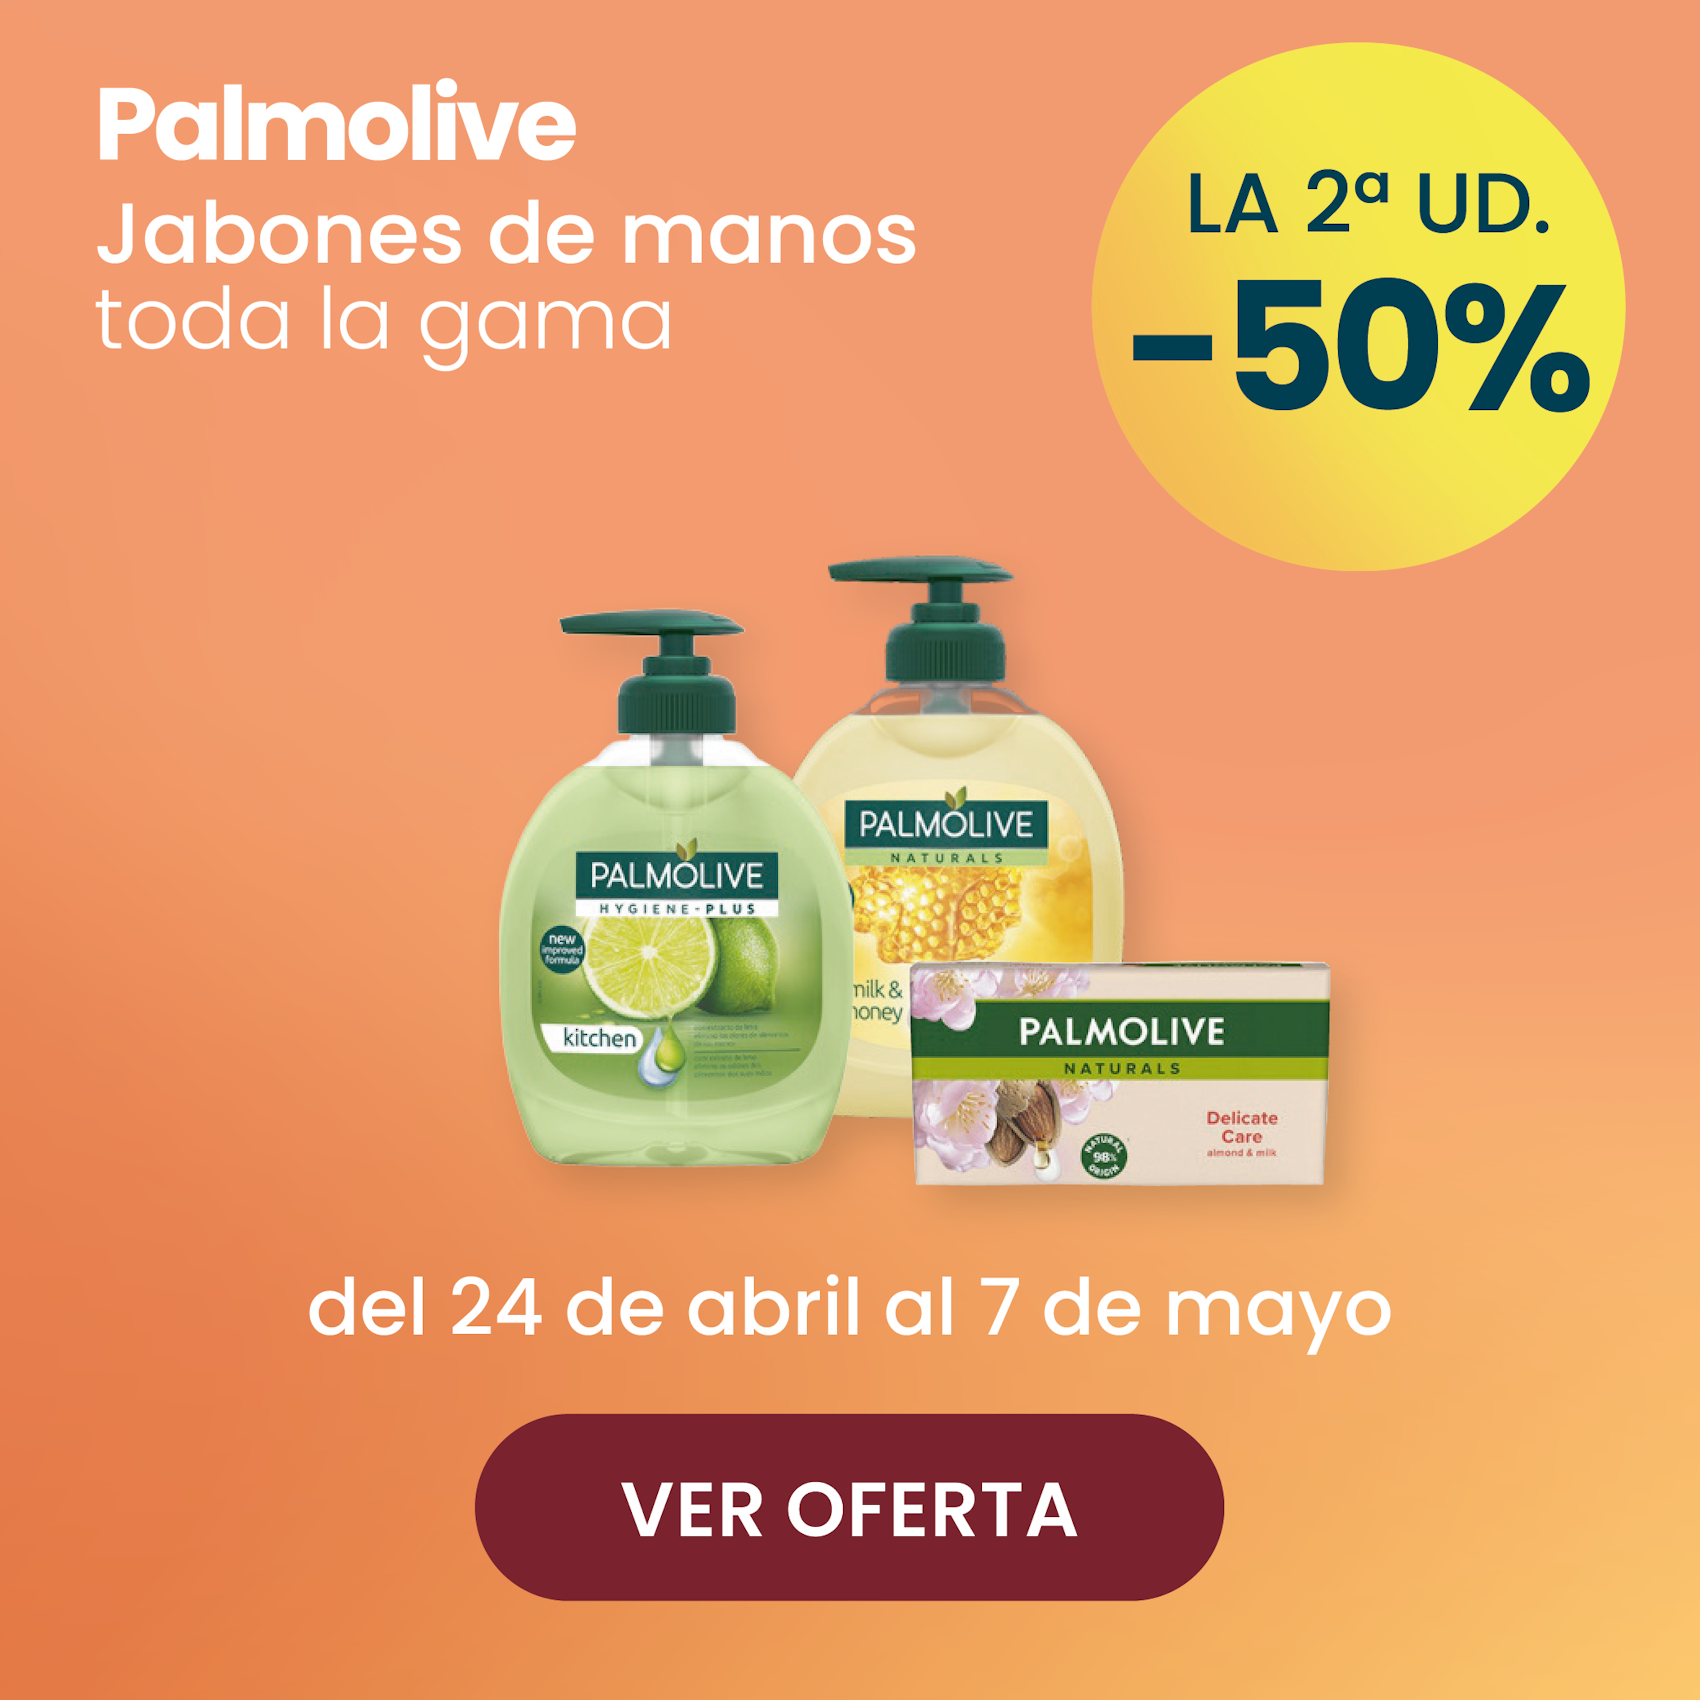 PALMOLIVE JABONES DE MANOS -50% la 2ª ud.